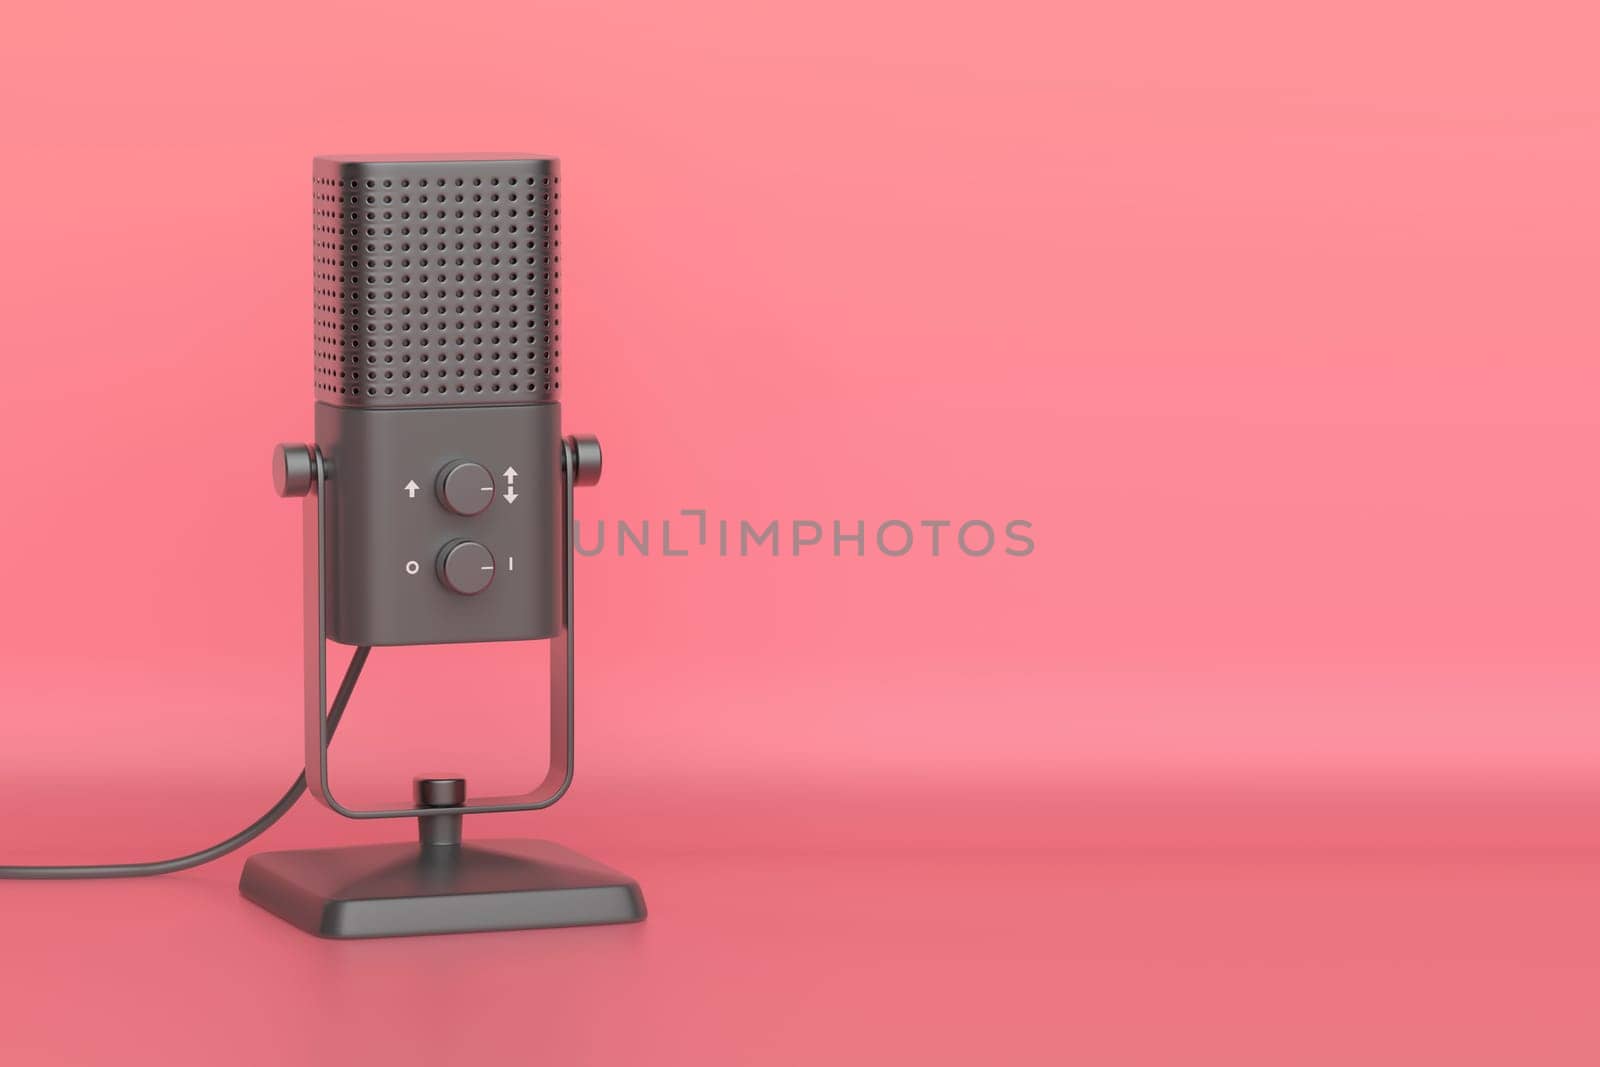 Black studio microphone on pink background